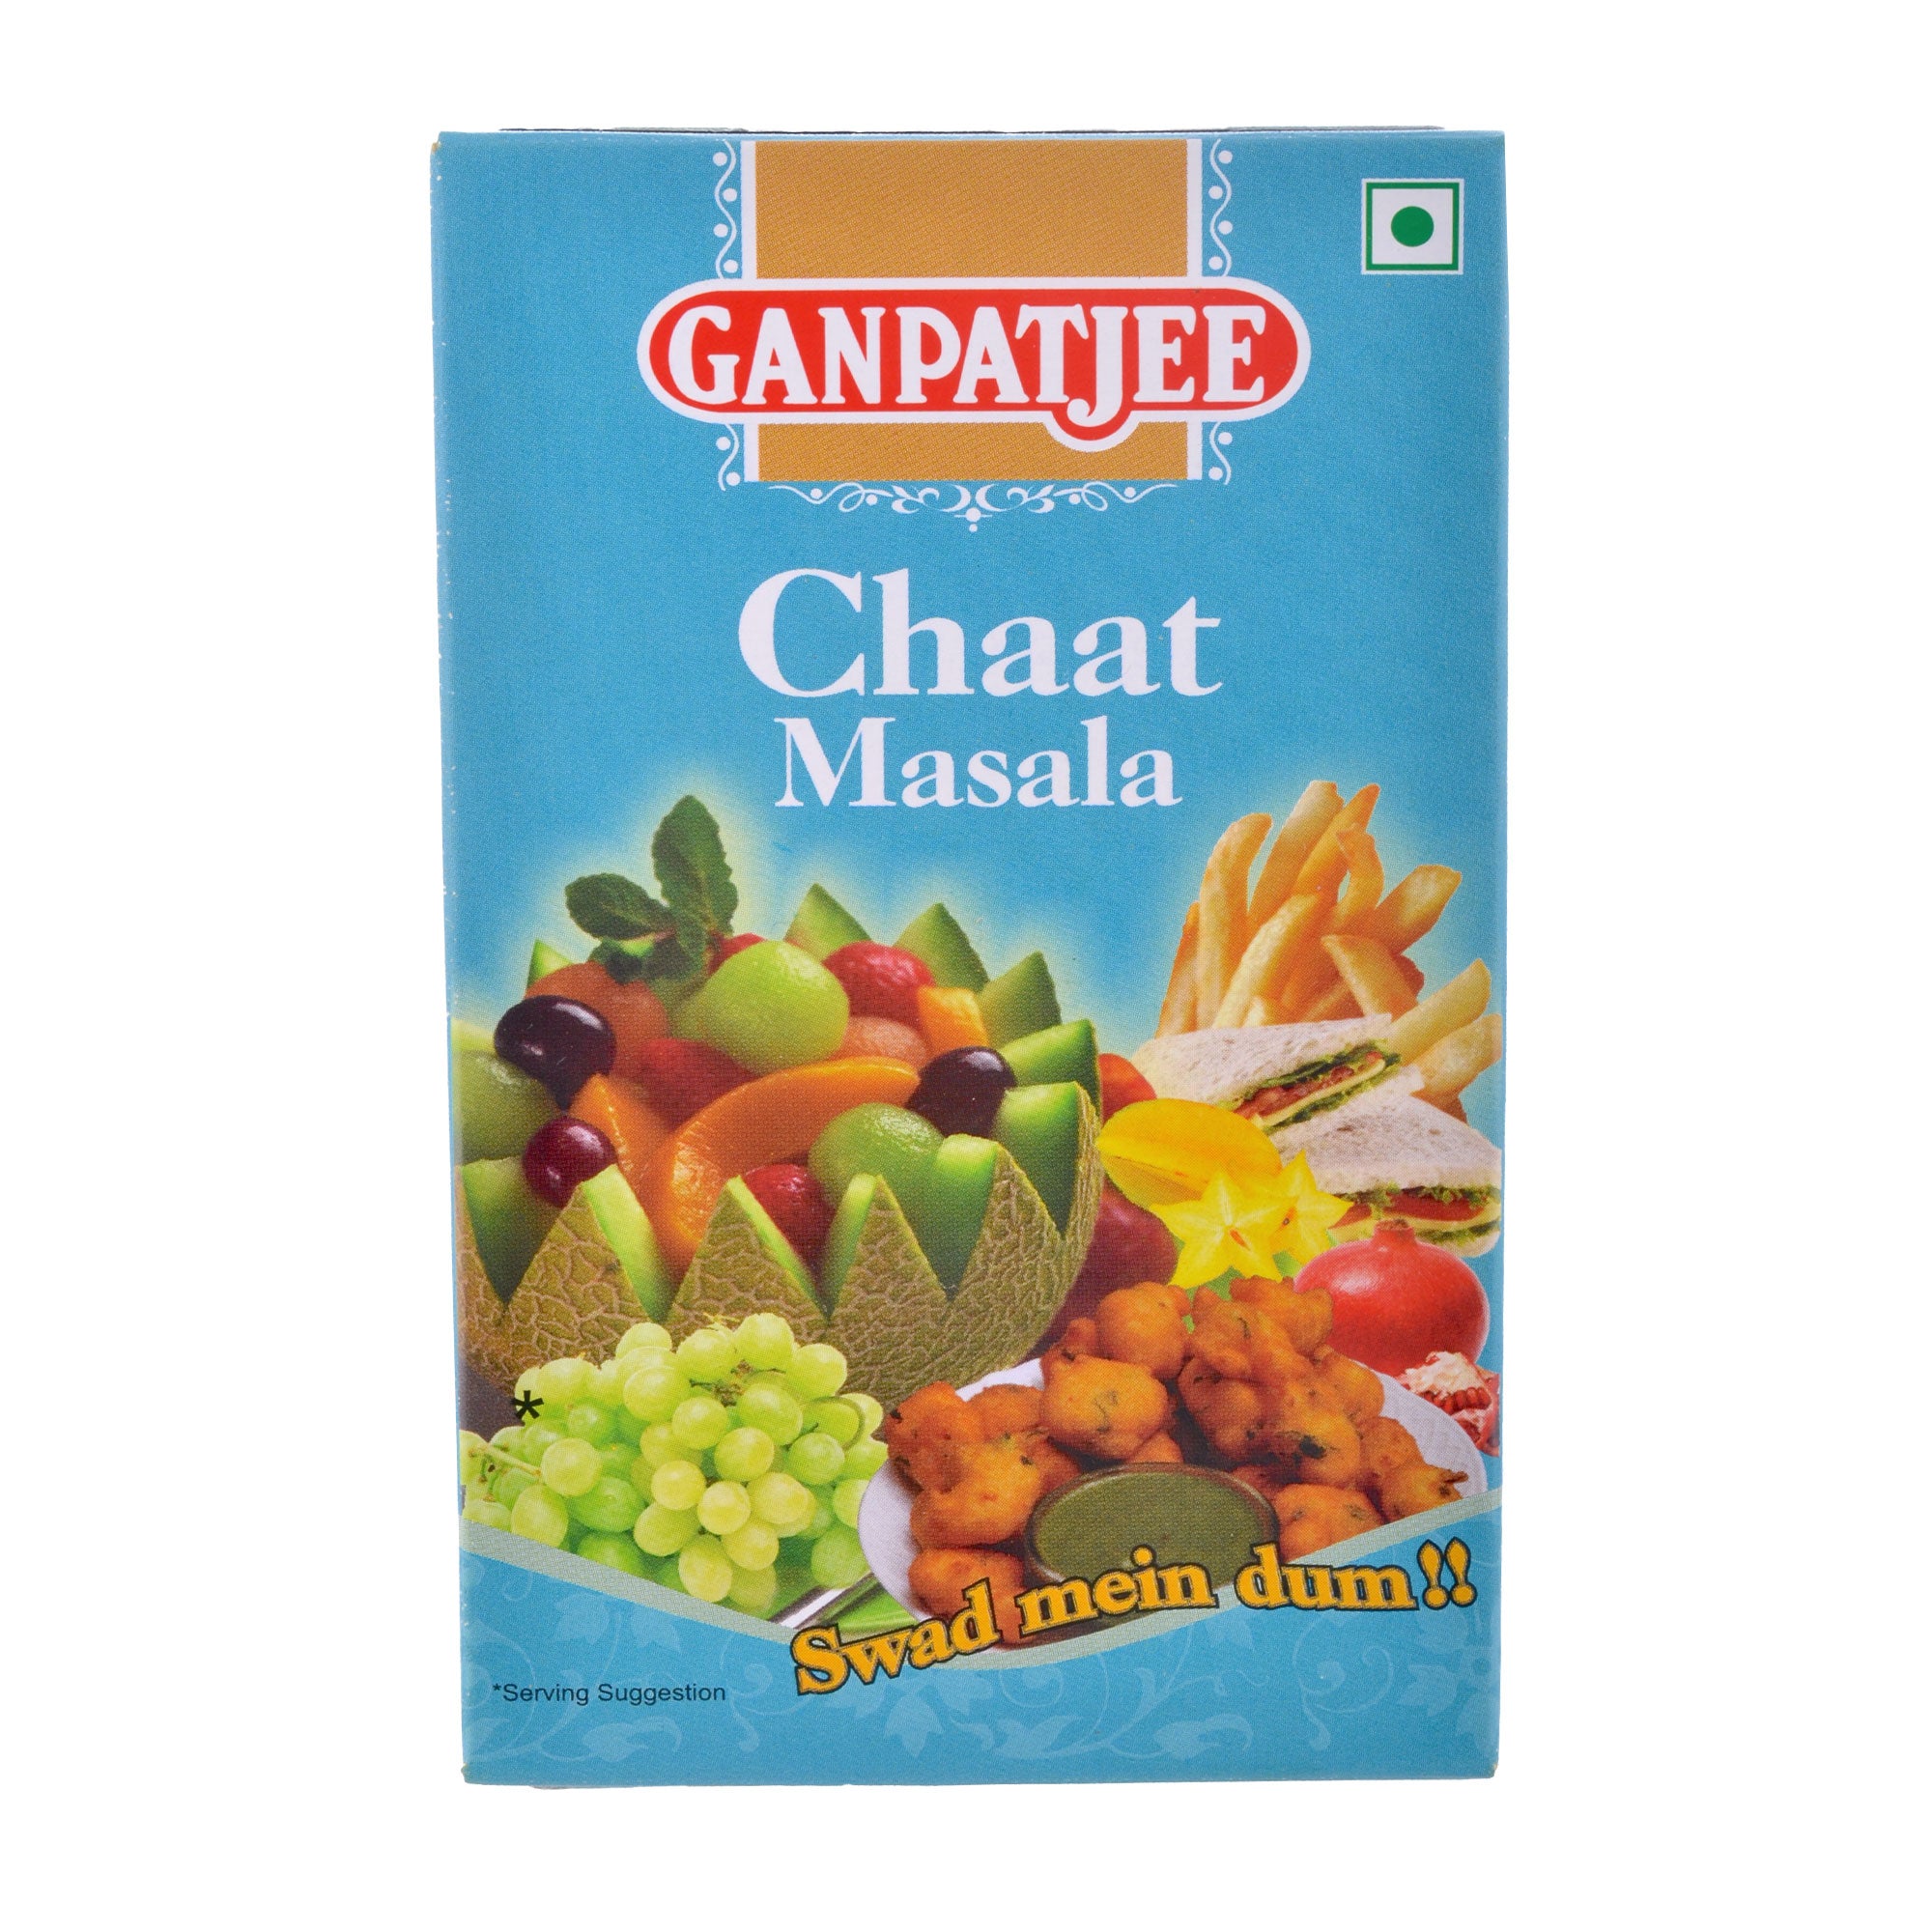 Ganpatjee Chaat Masala Powder 100g